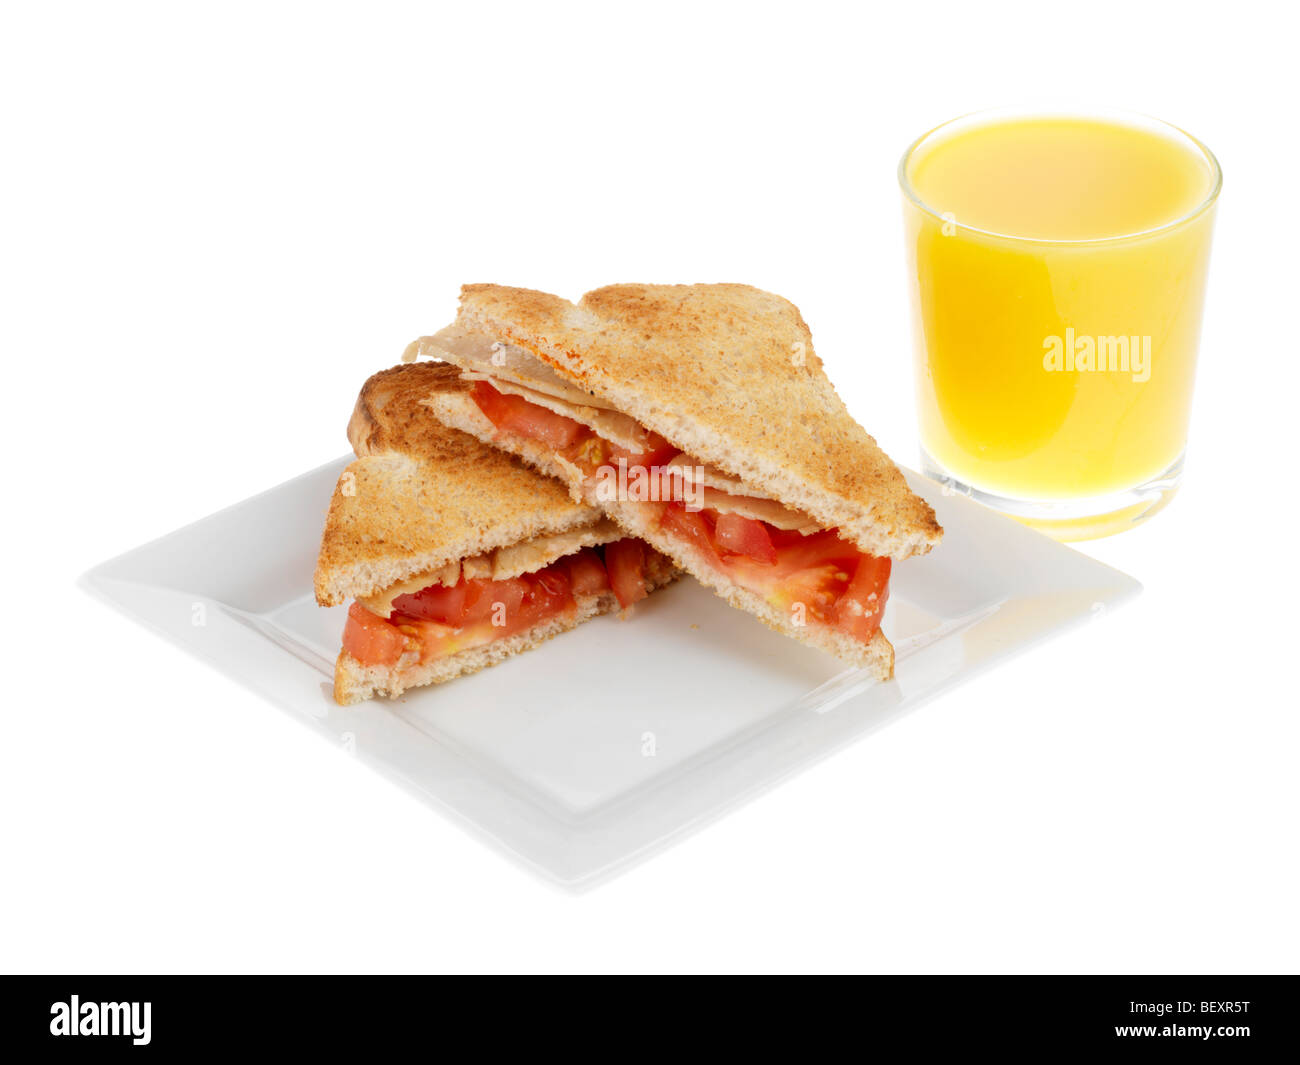 https://c8.alamy.com/comp/BEXR5T/turkey-and-tomato-toasted-sandwich-BEXR5T.jpg